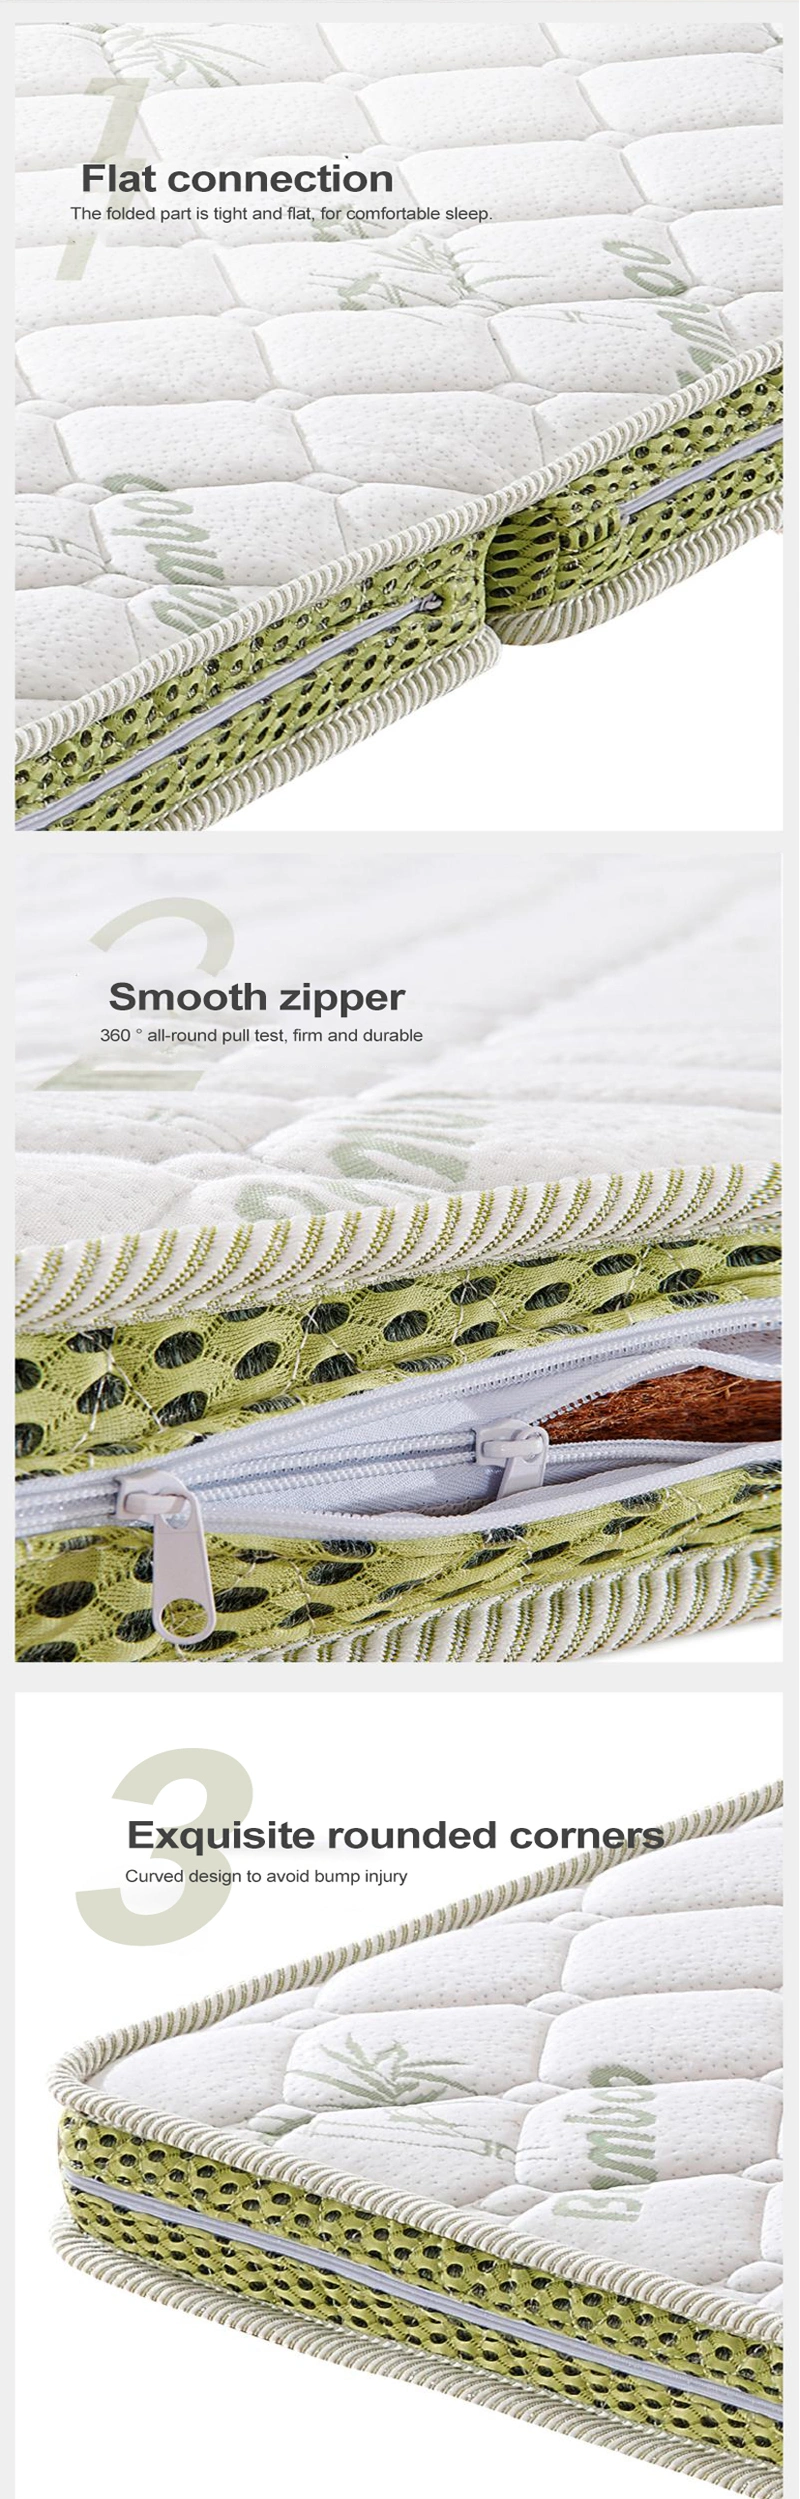 Home Latex Sleeping Tatami Folding Detachable Washable 18cm Double Bed